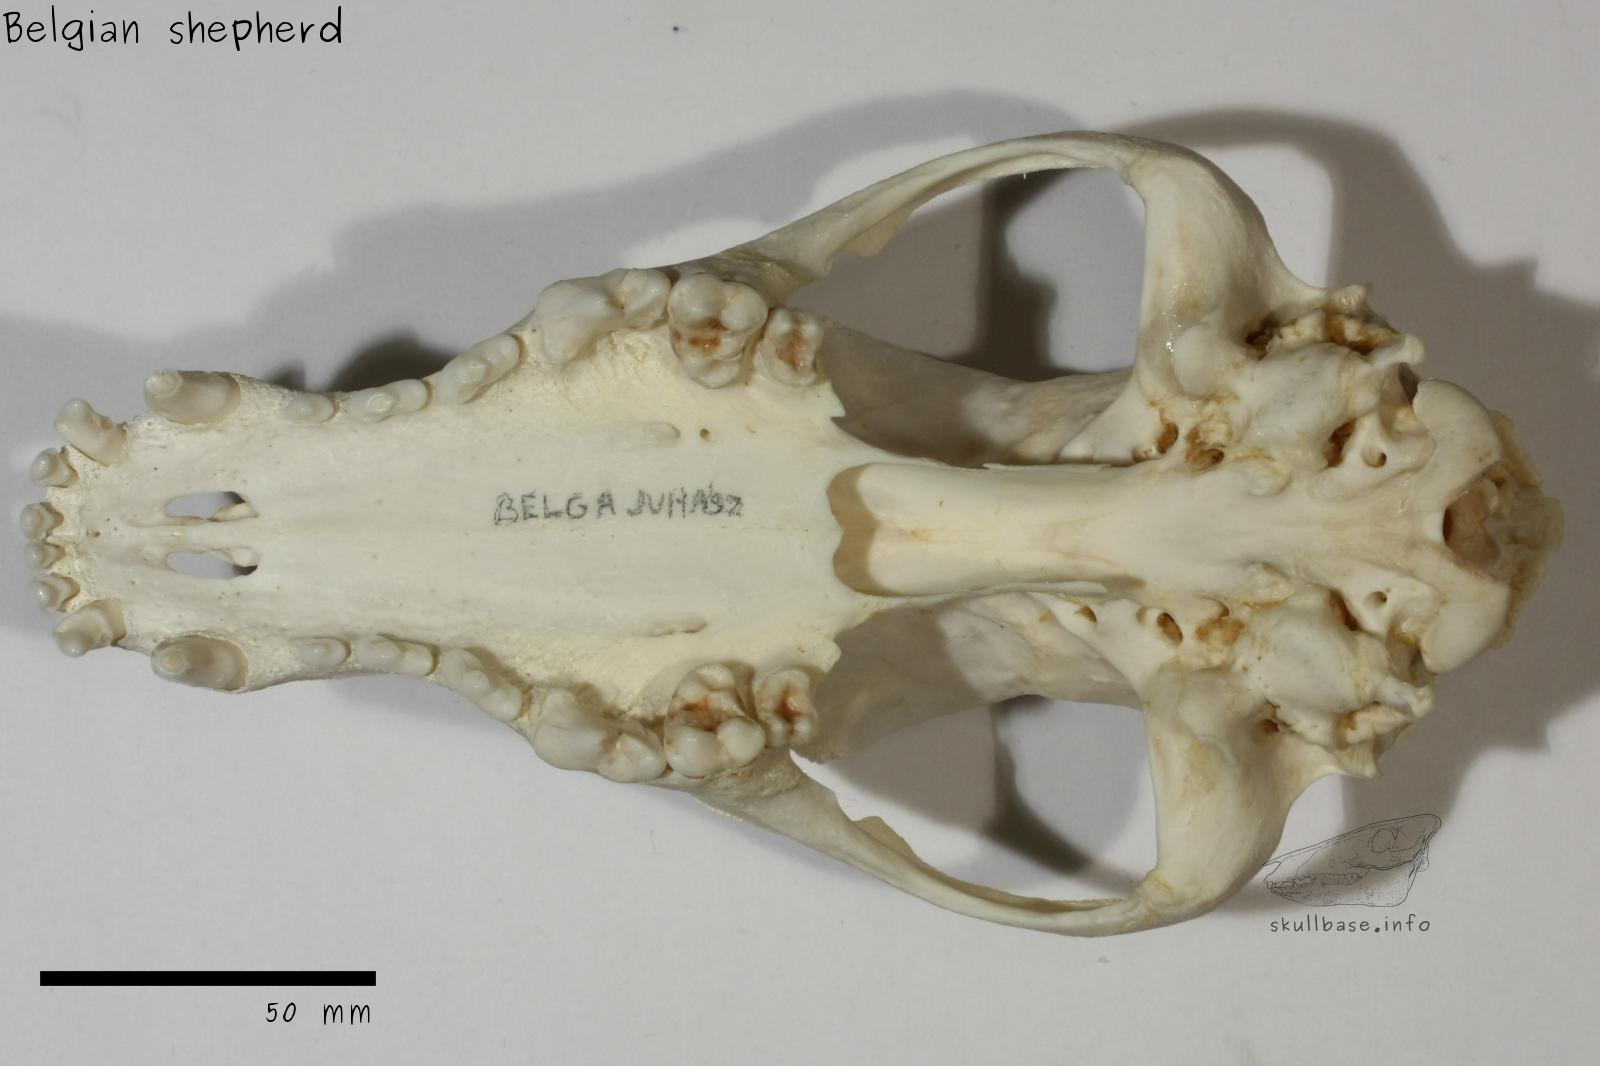 Belgian shepherd (Canis lupus familiaris) skull ventral view